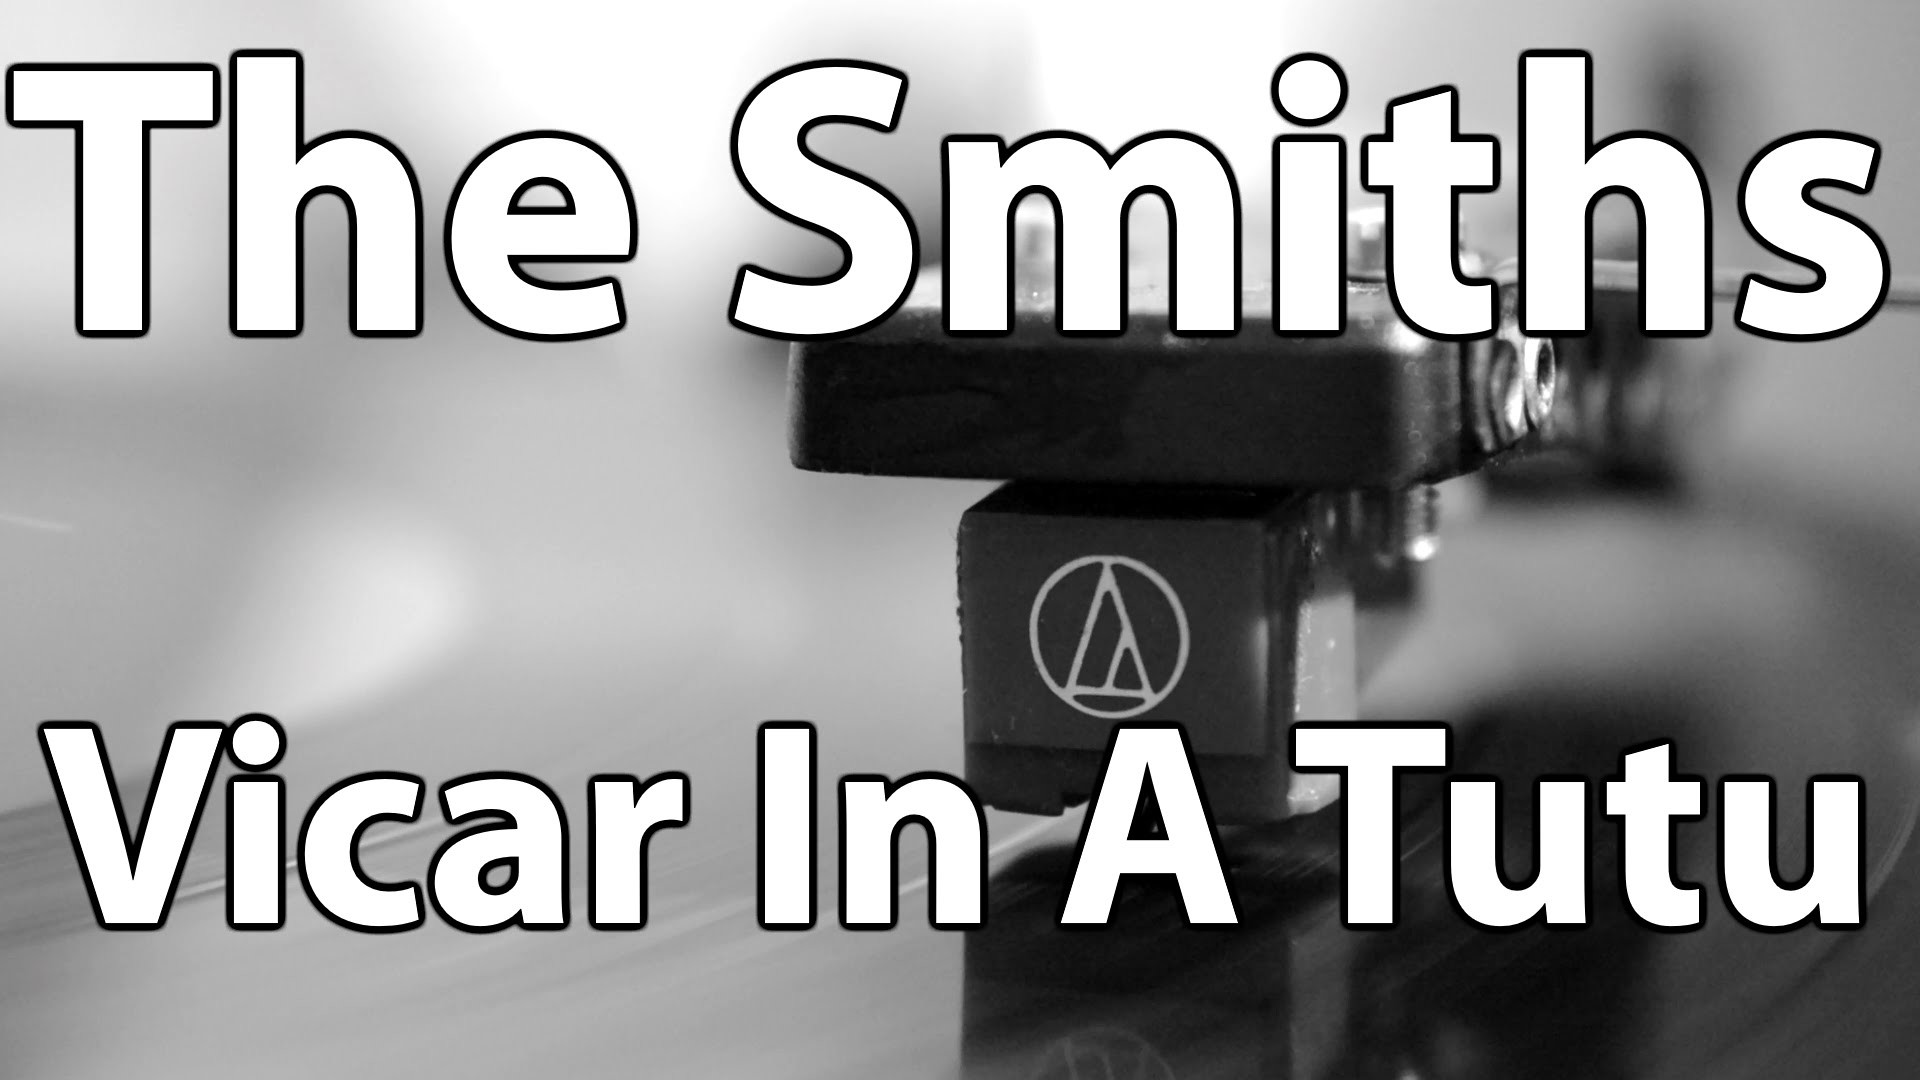 1920x1080 Vicar In A Tutu - The Smiths on Vinyl